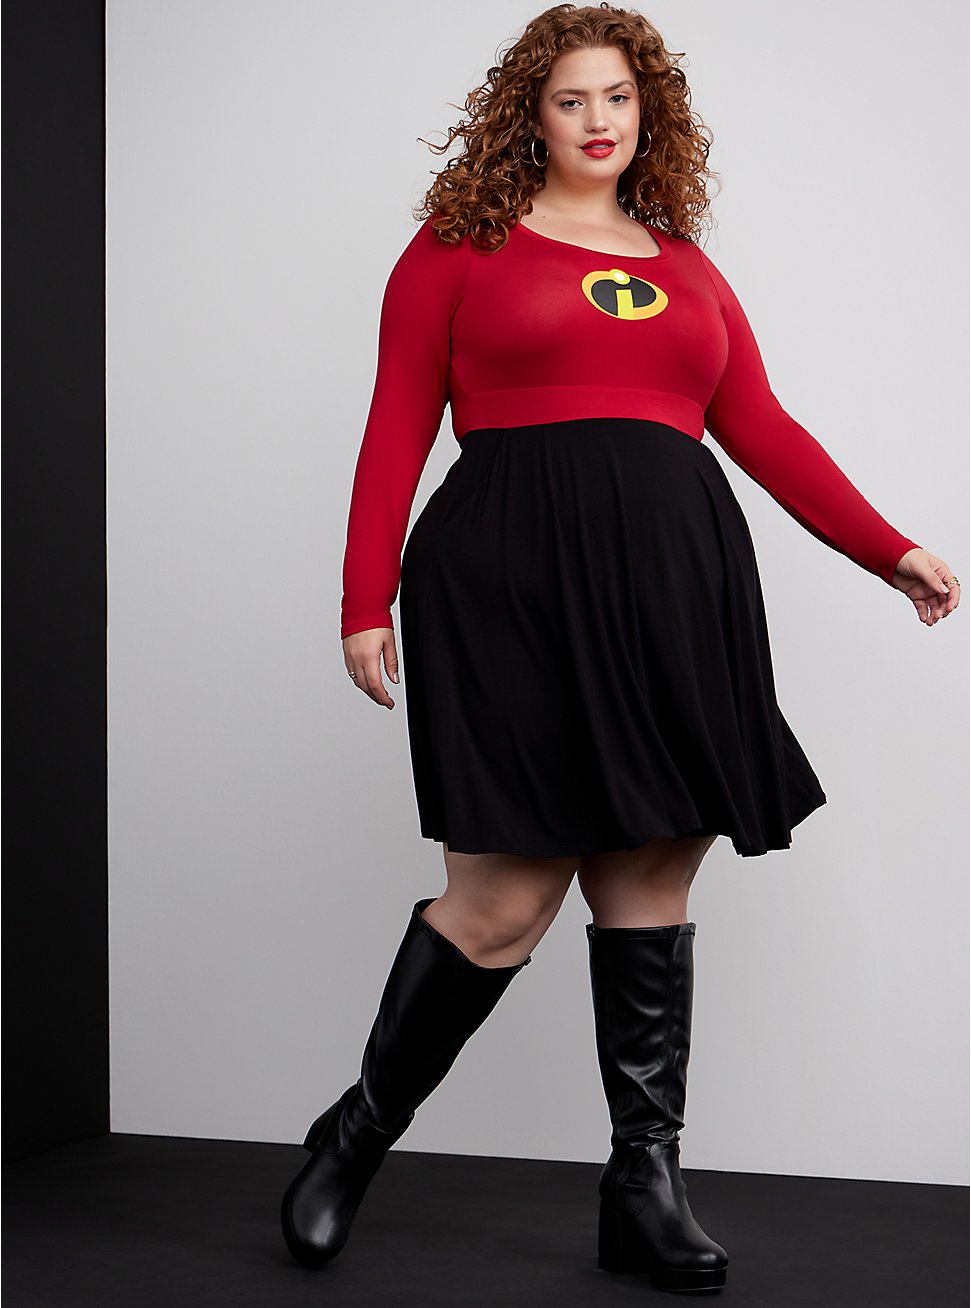 Plus Size Disney Pixar The Incredibles Skater Dress - Red & Black , BLACK  RED, hi-res